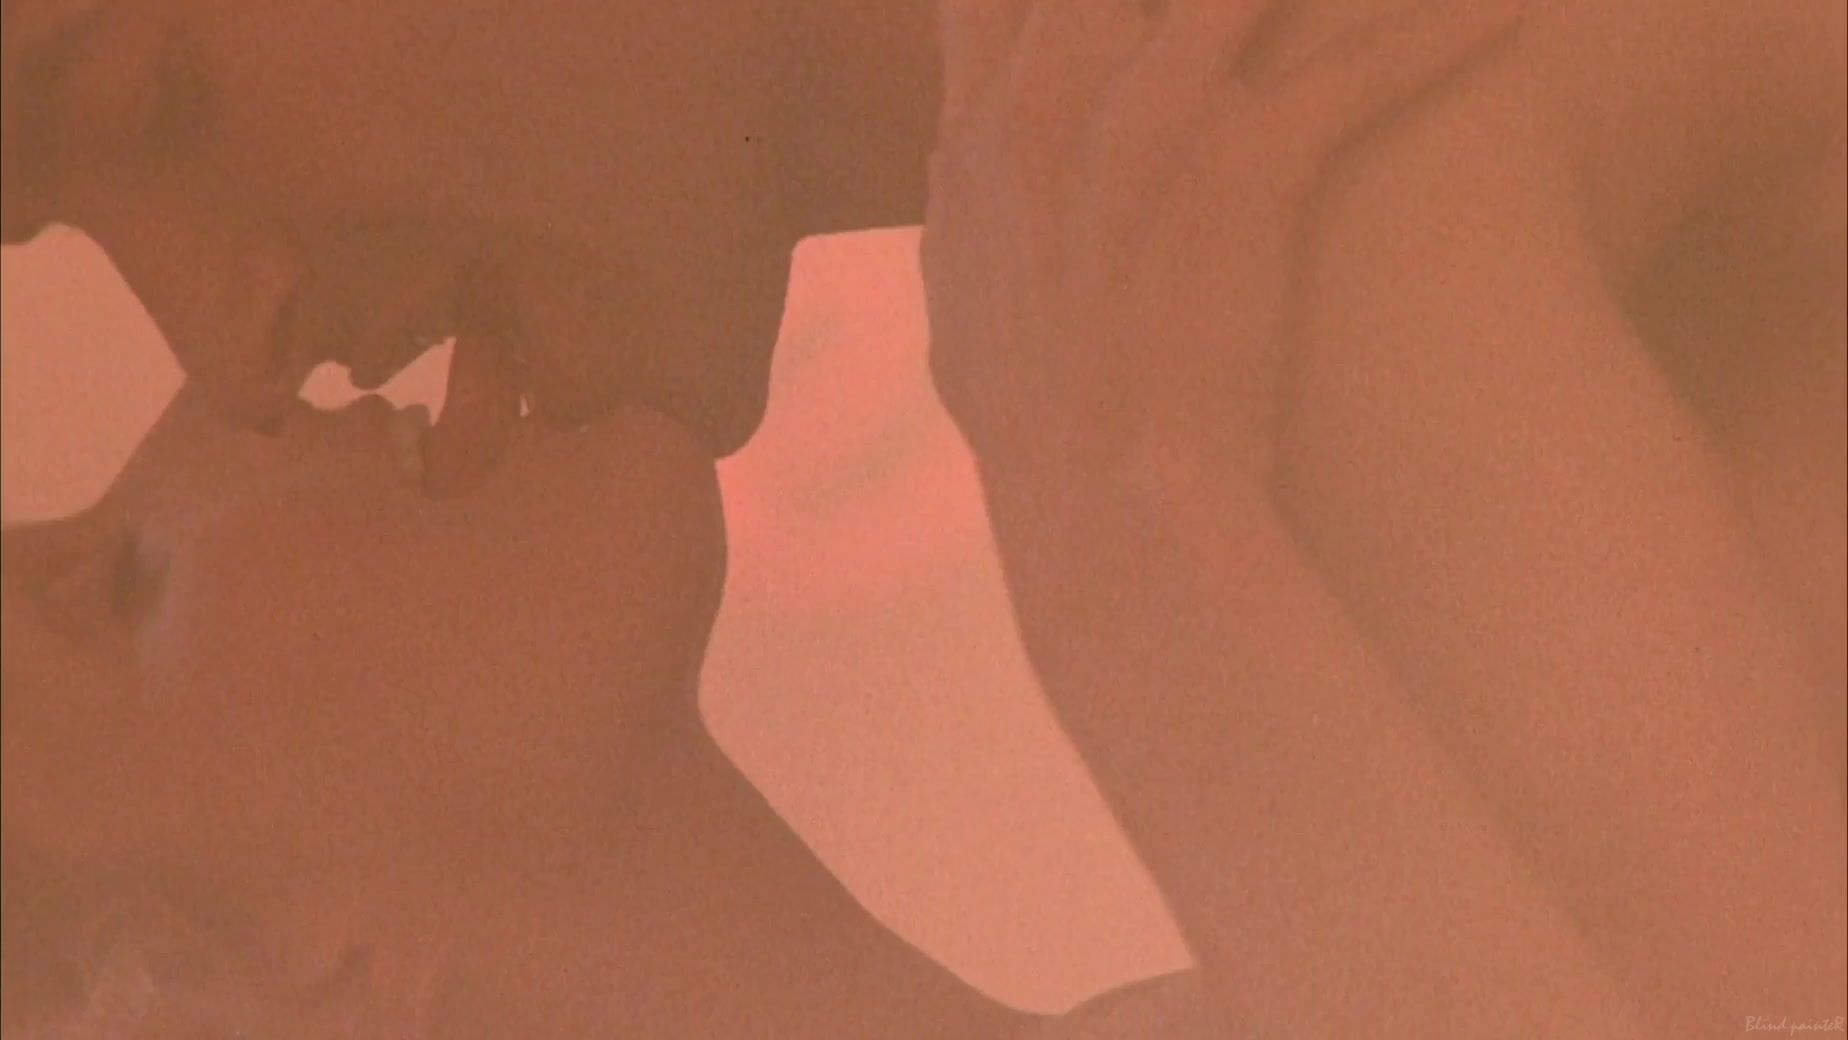 Naughty Hot Nudity scene from Classic Adult Movie "Bolero" C.urvy